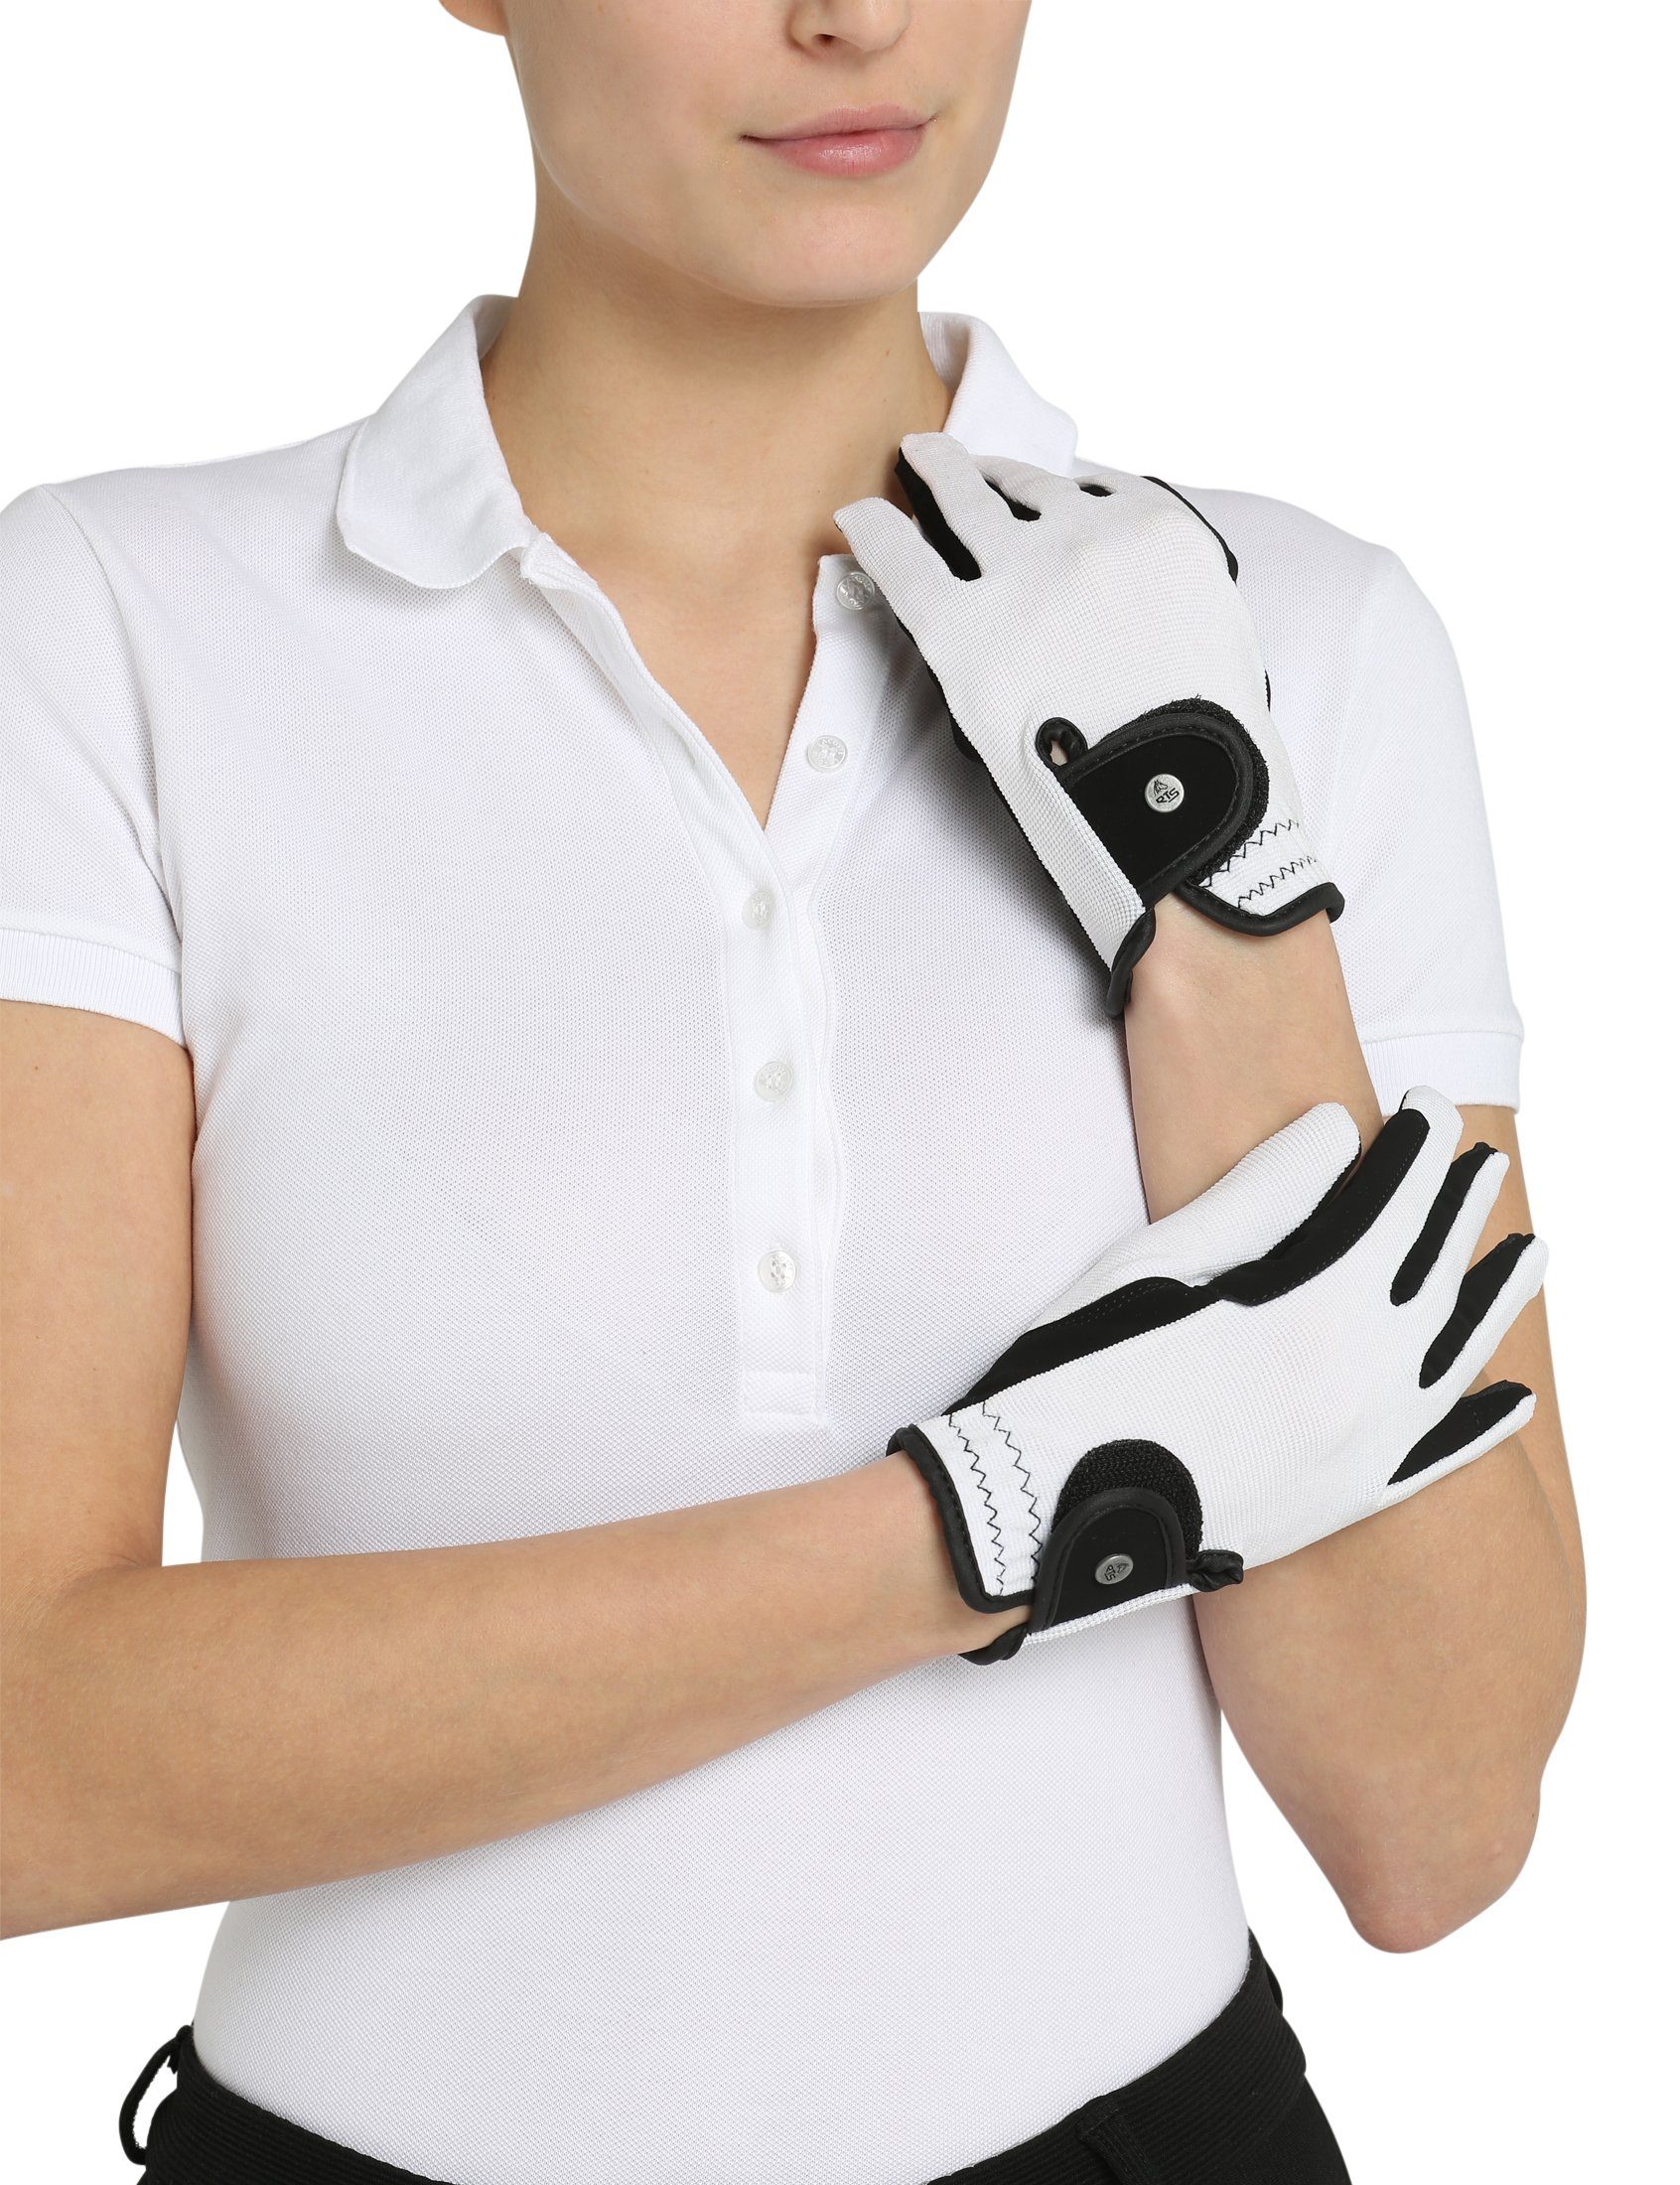 Zoomyo Fleecehandschuhe Damen Handschuhe the Schwarz/Weiß material thin pleasantly Gloves is REIT